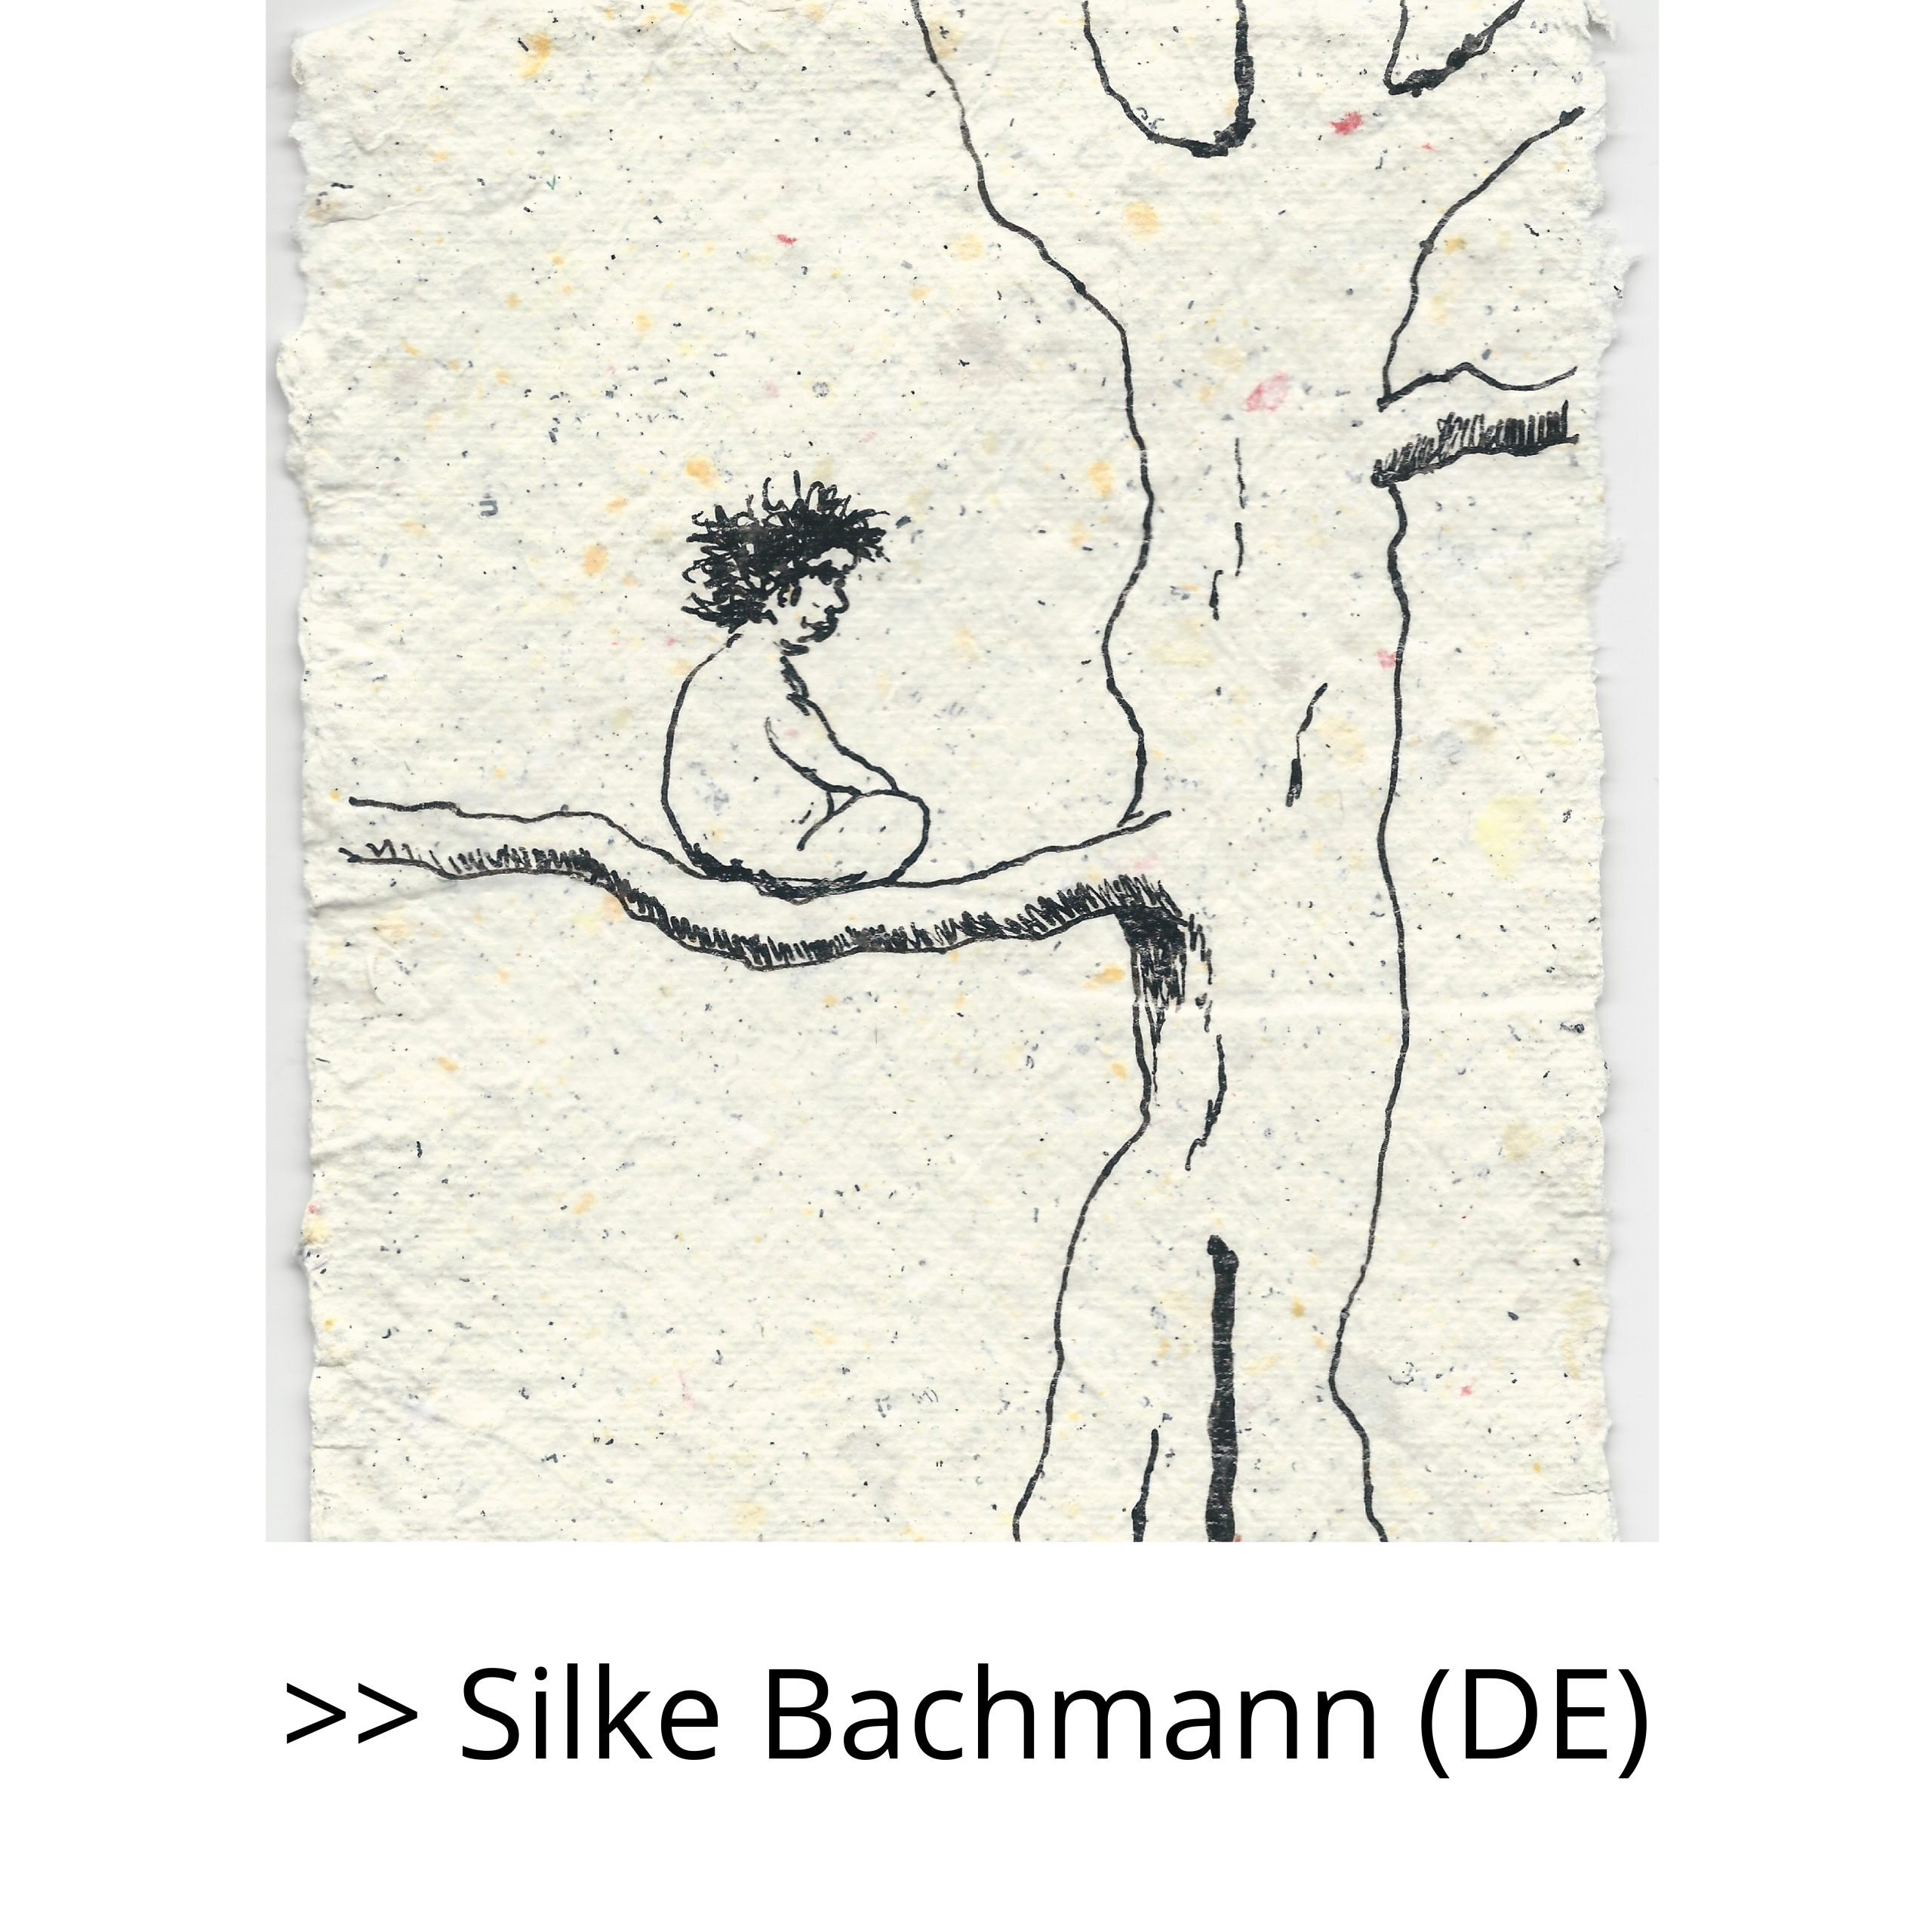 SILKE BACHMANN (DE)